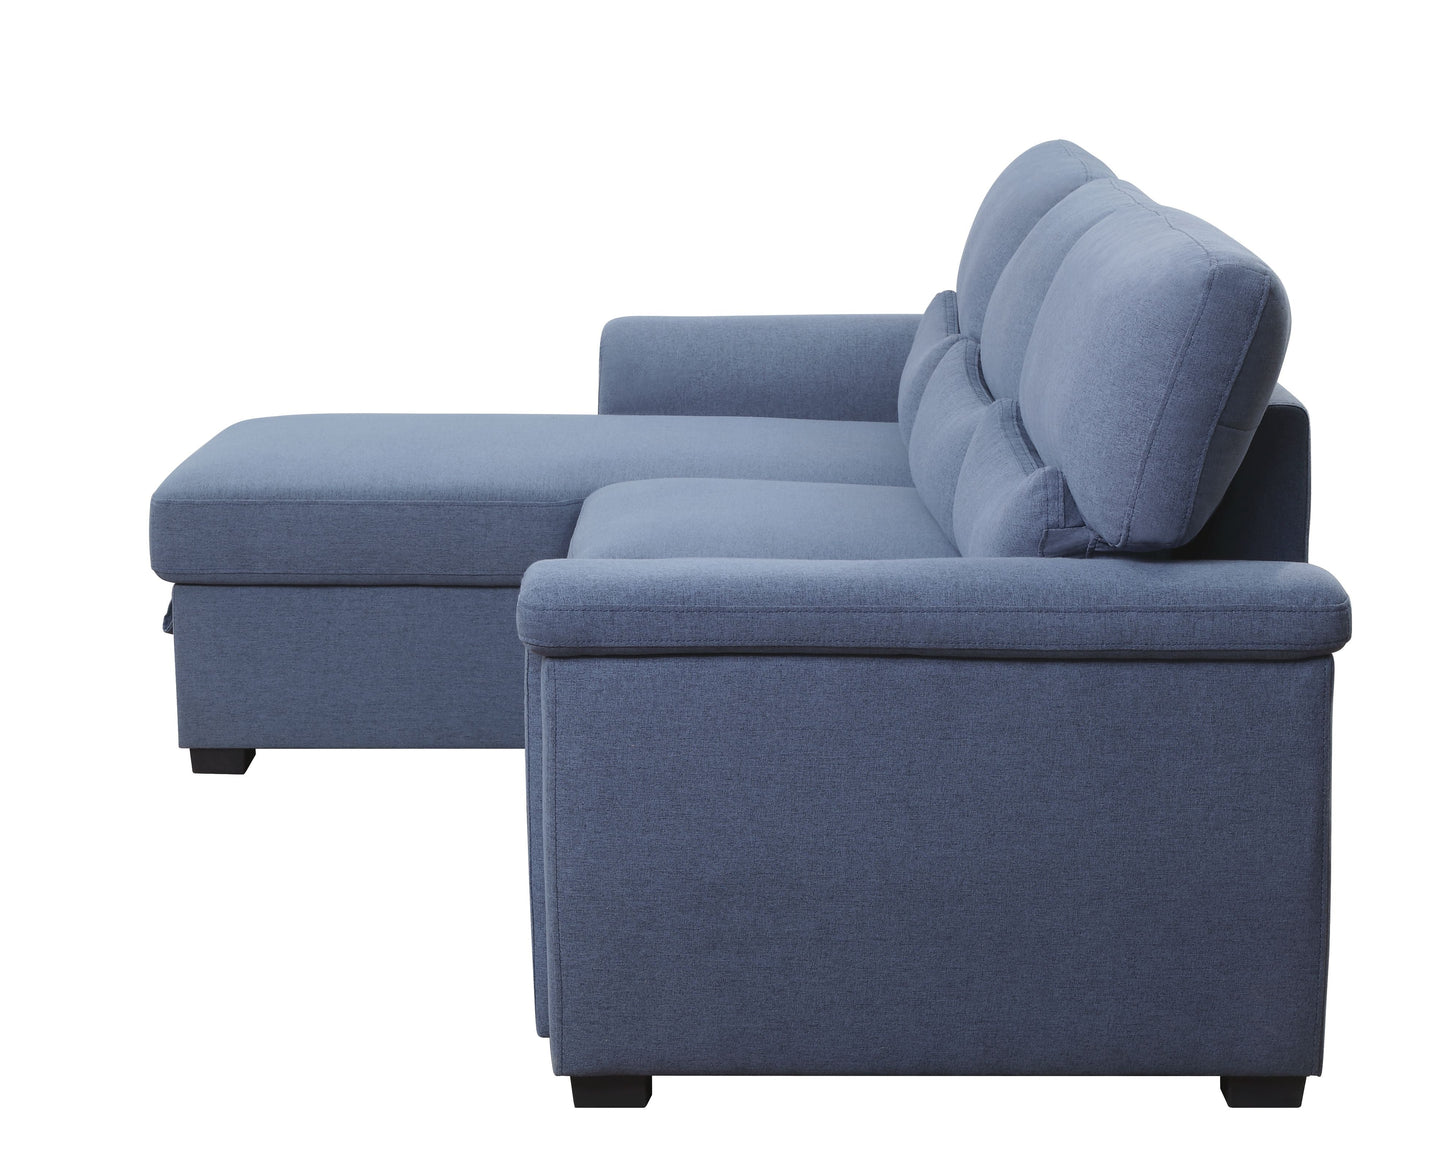 Noemi Reversible Storage Sleeper Sectional Sofa, Blue Fabric 55540 - Demine Essentials